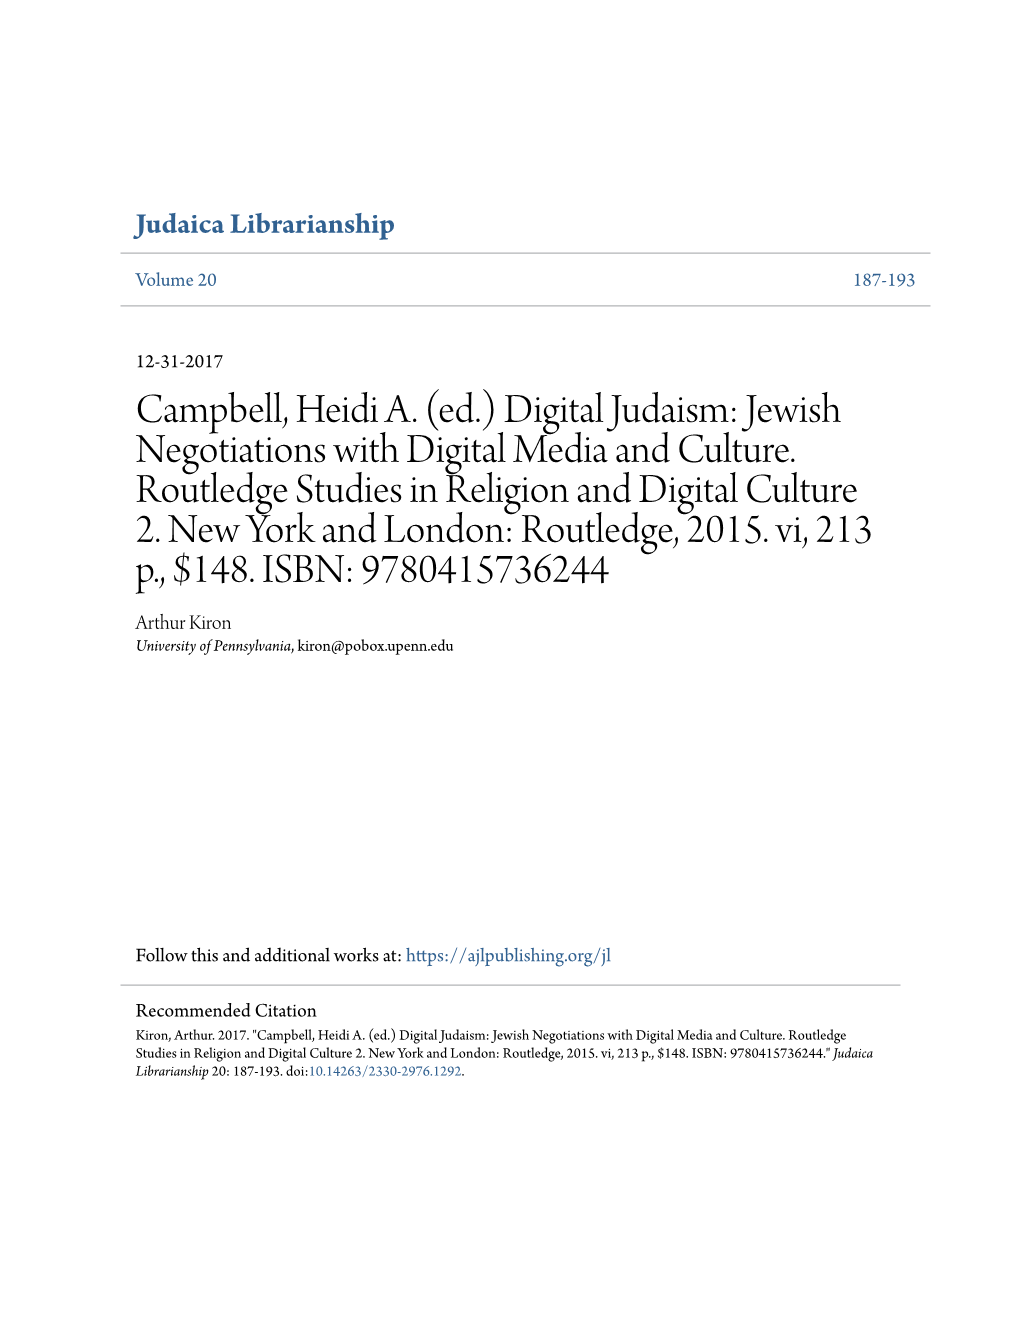 Campbell, Heidi A. (Ed.) Digital Judaism: Jewish Negotiations with Digital Media and Culture